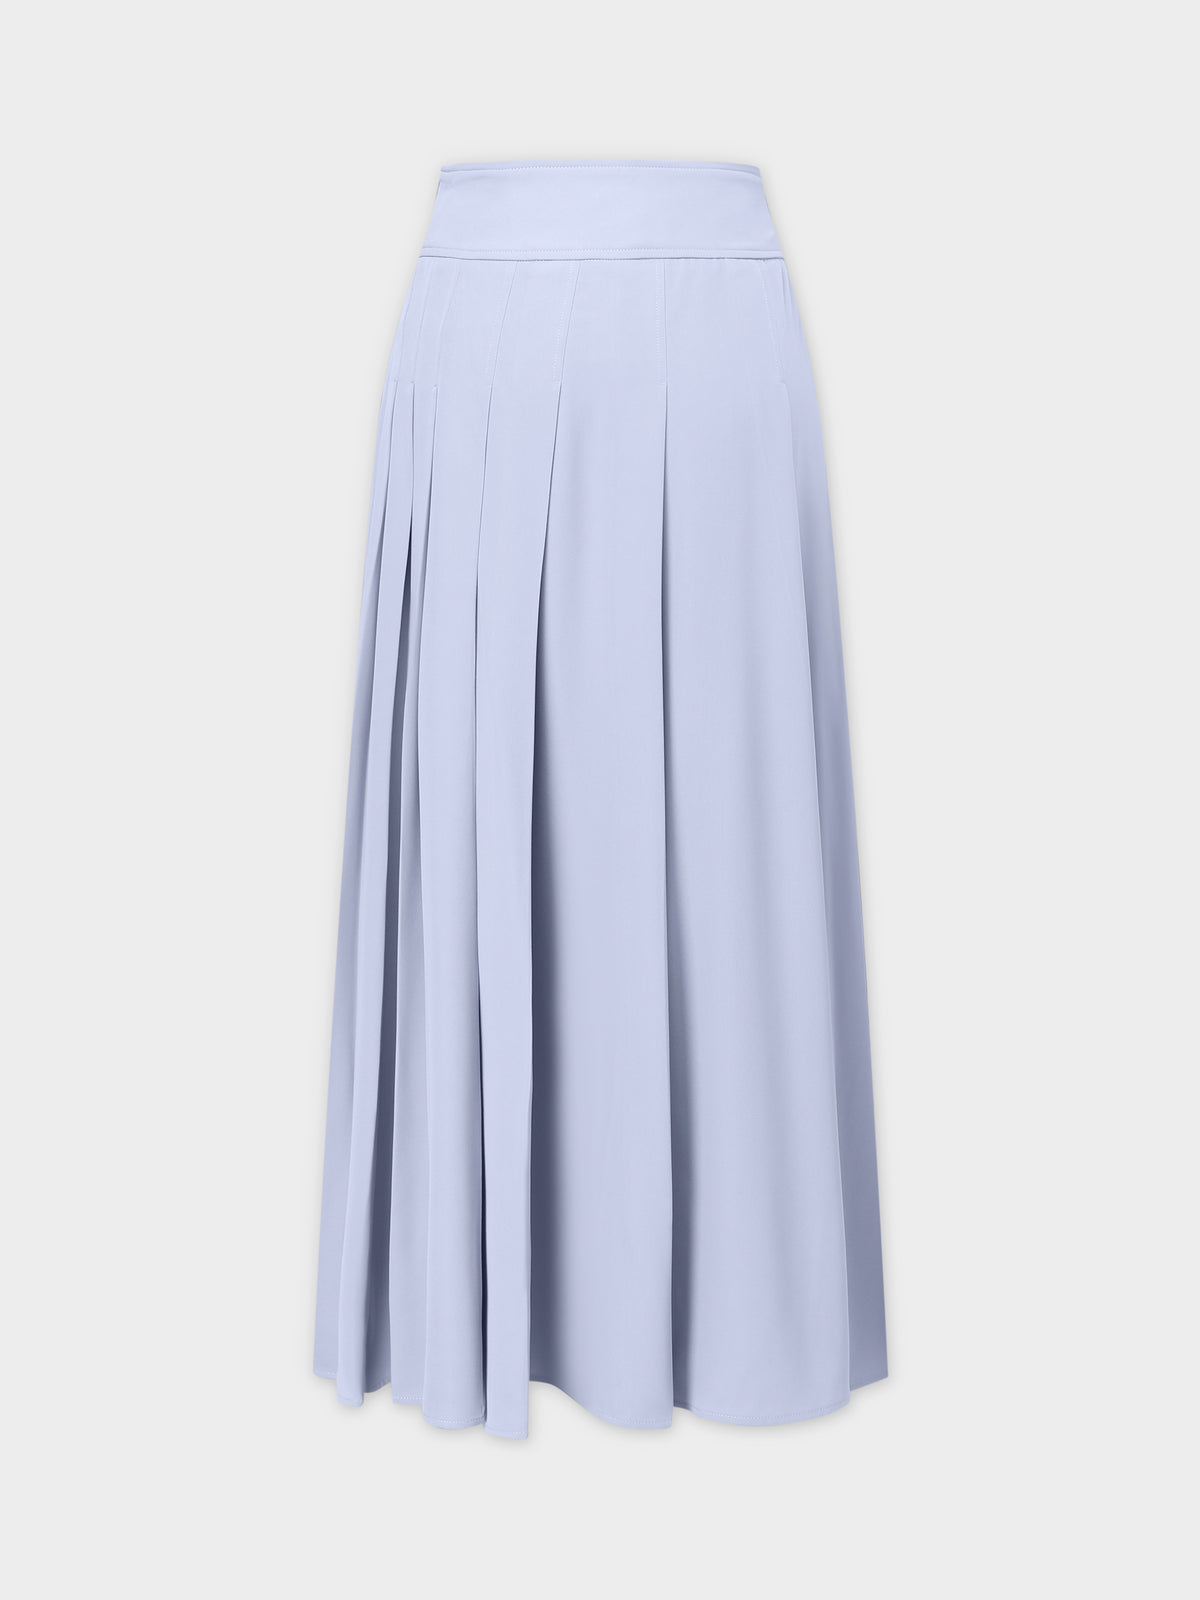 Yolk Pleated Skirt 37"-Grey Blue